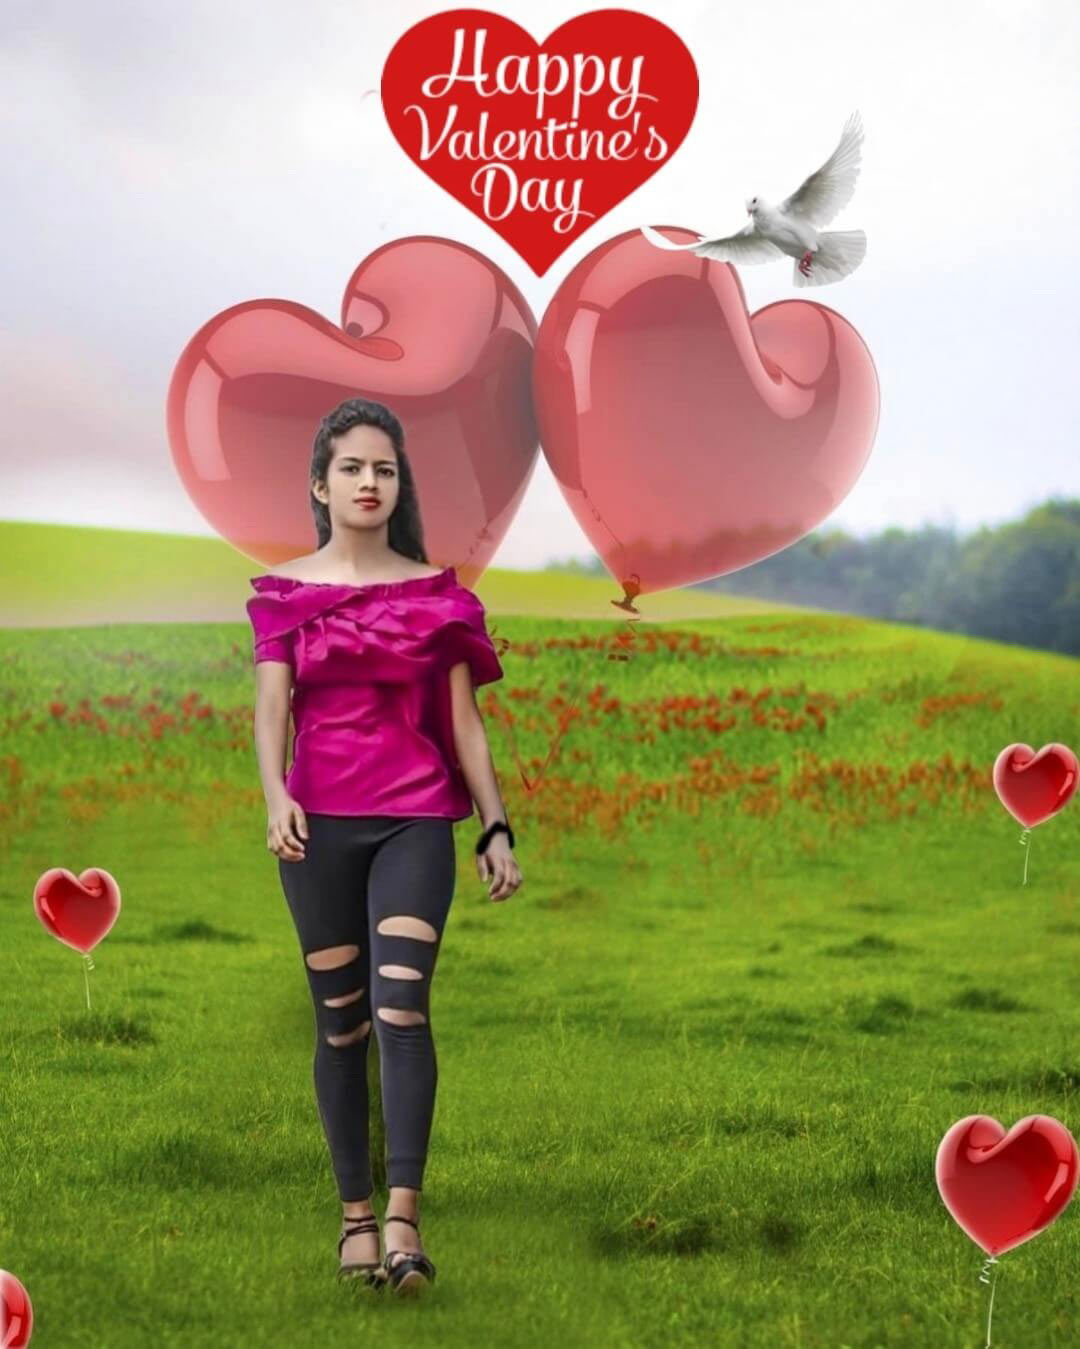 Happy Valentine Day PicsArt Background Free Stock Image